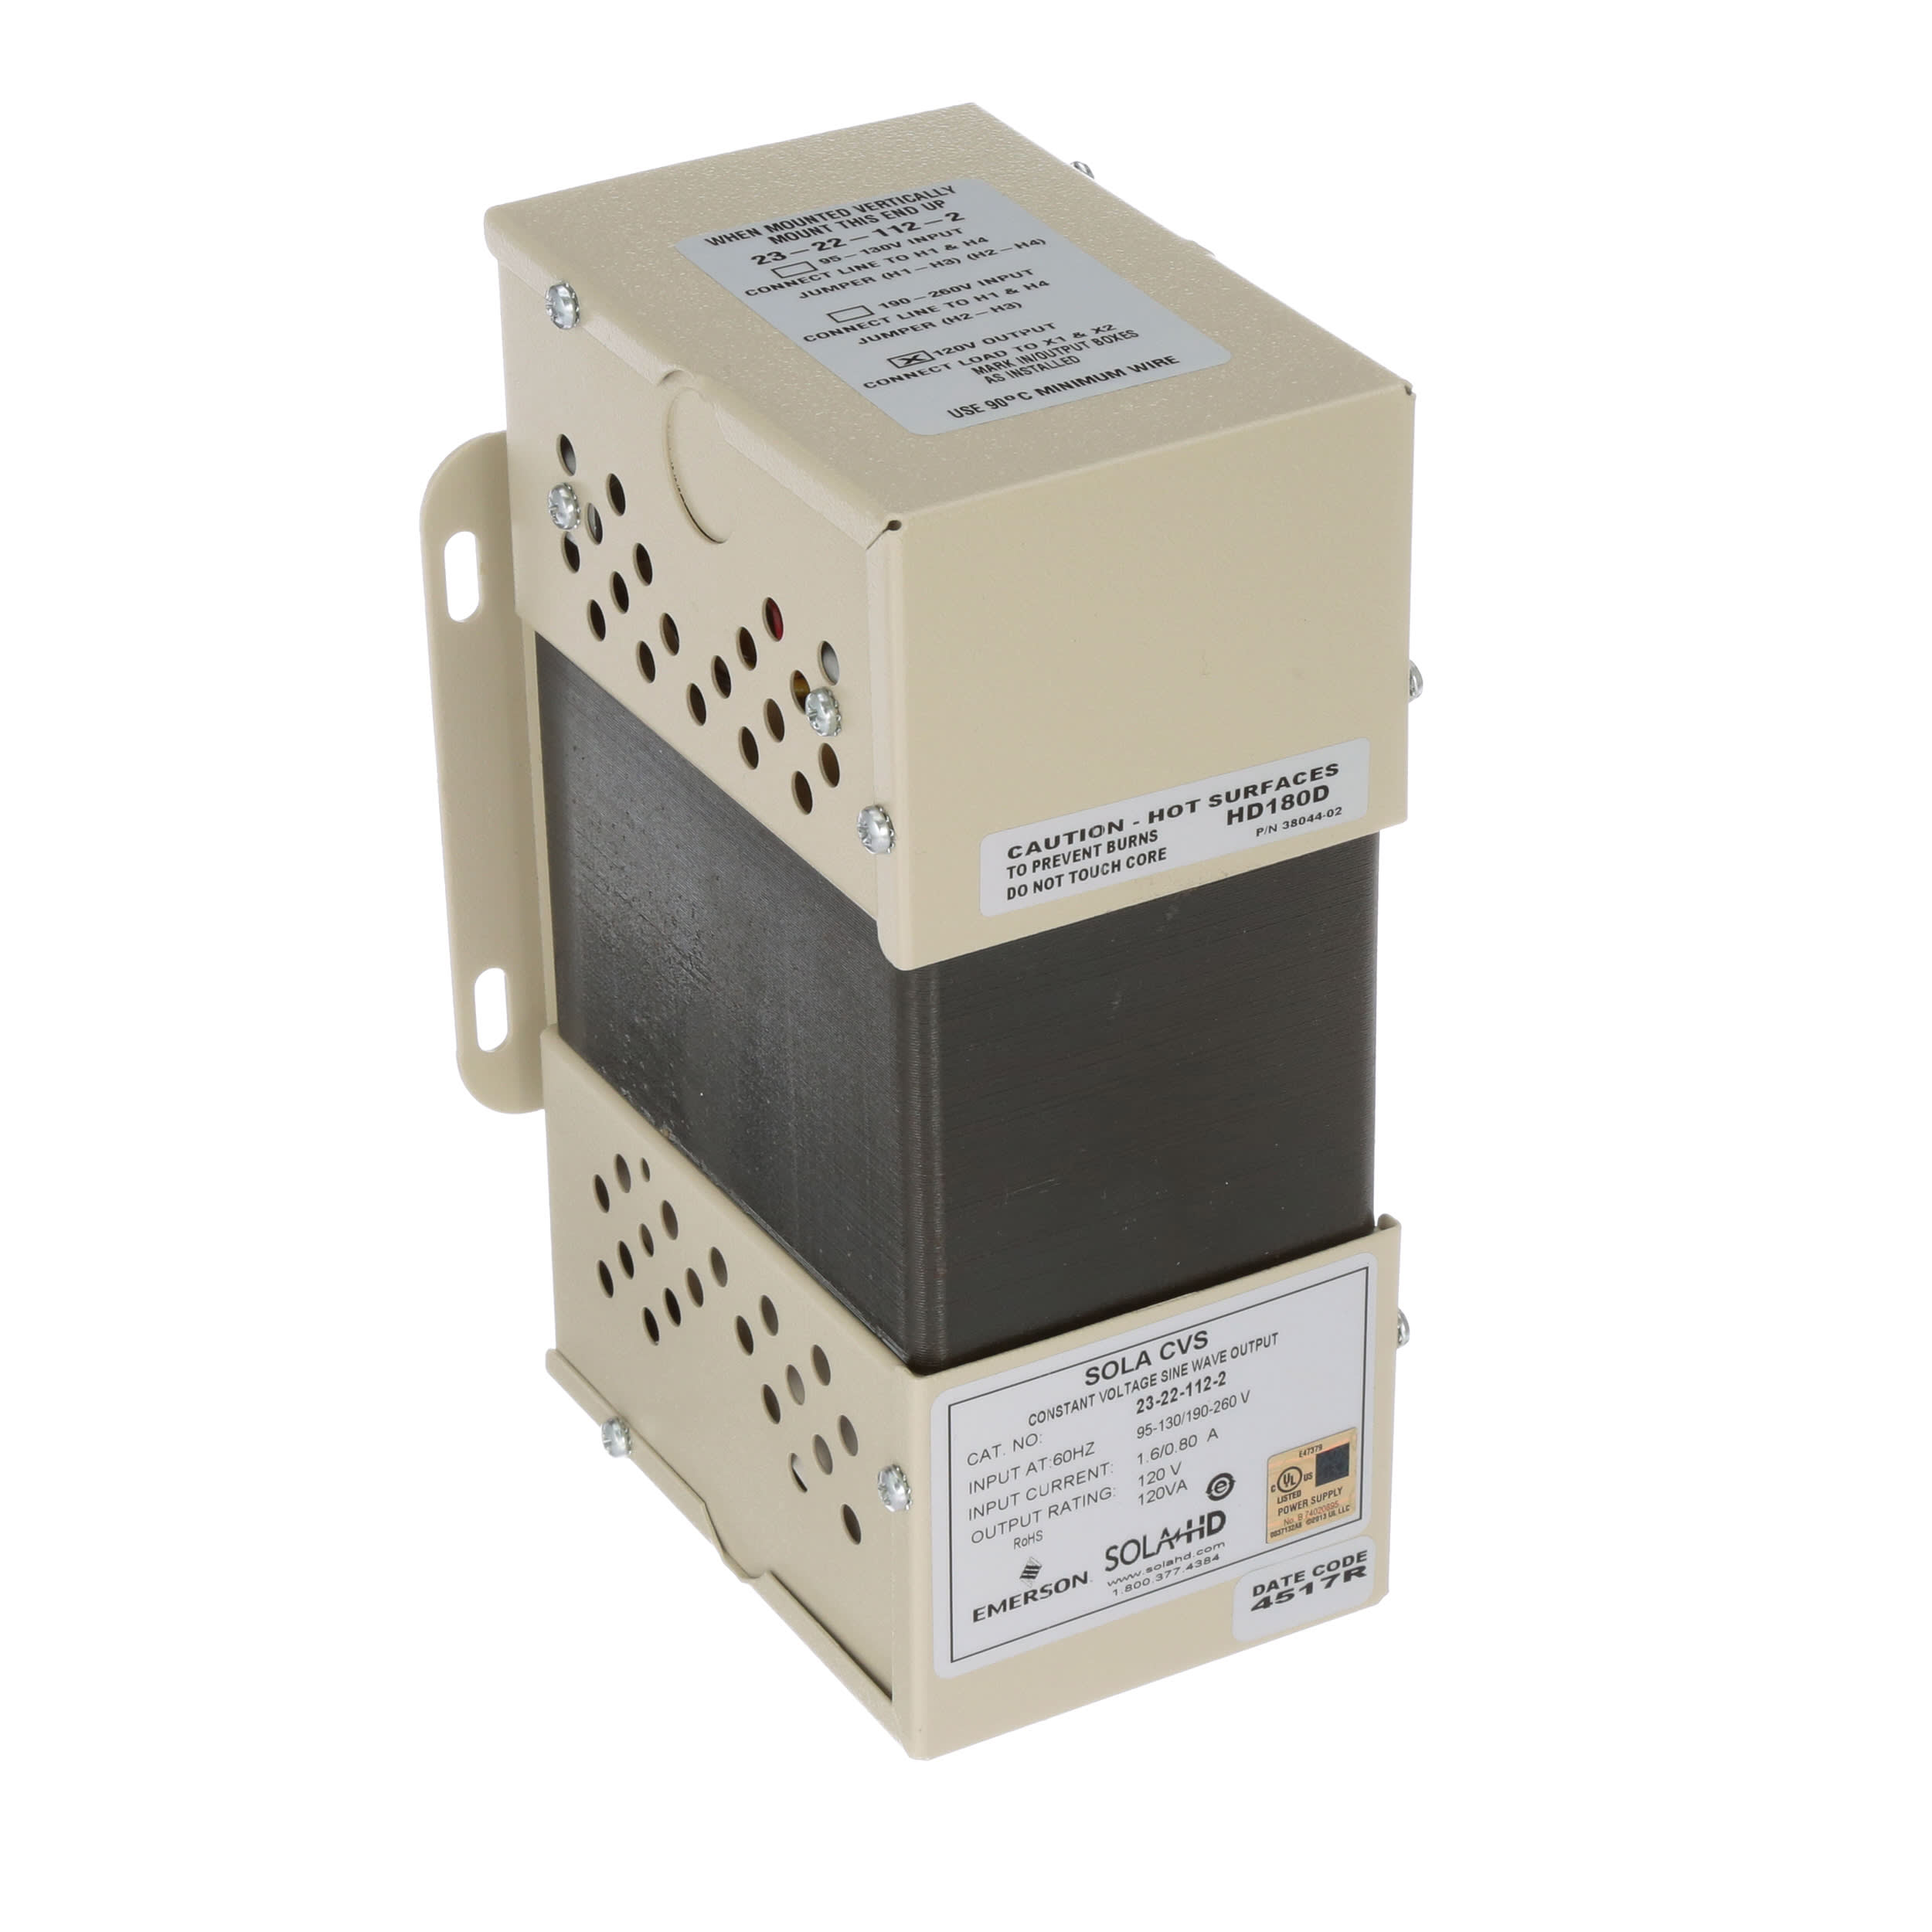 Emerson Sola HD CVS Constant Voltage Transformer 23-23-125-8 Output 120V